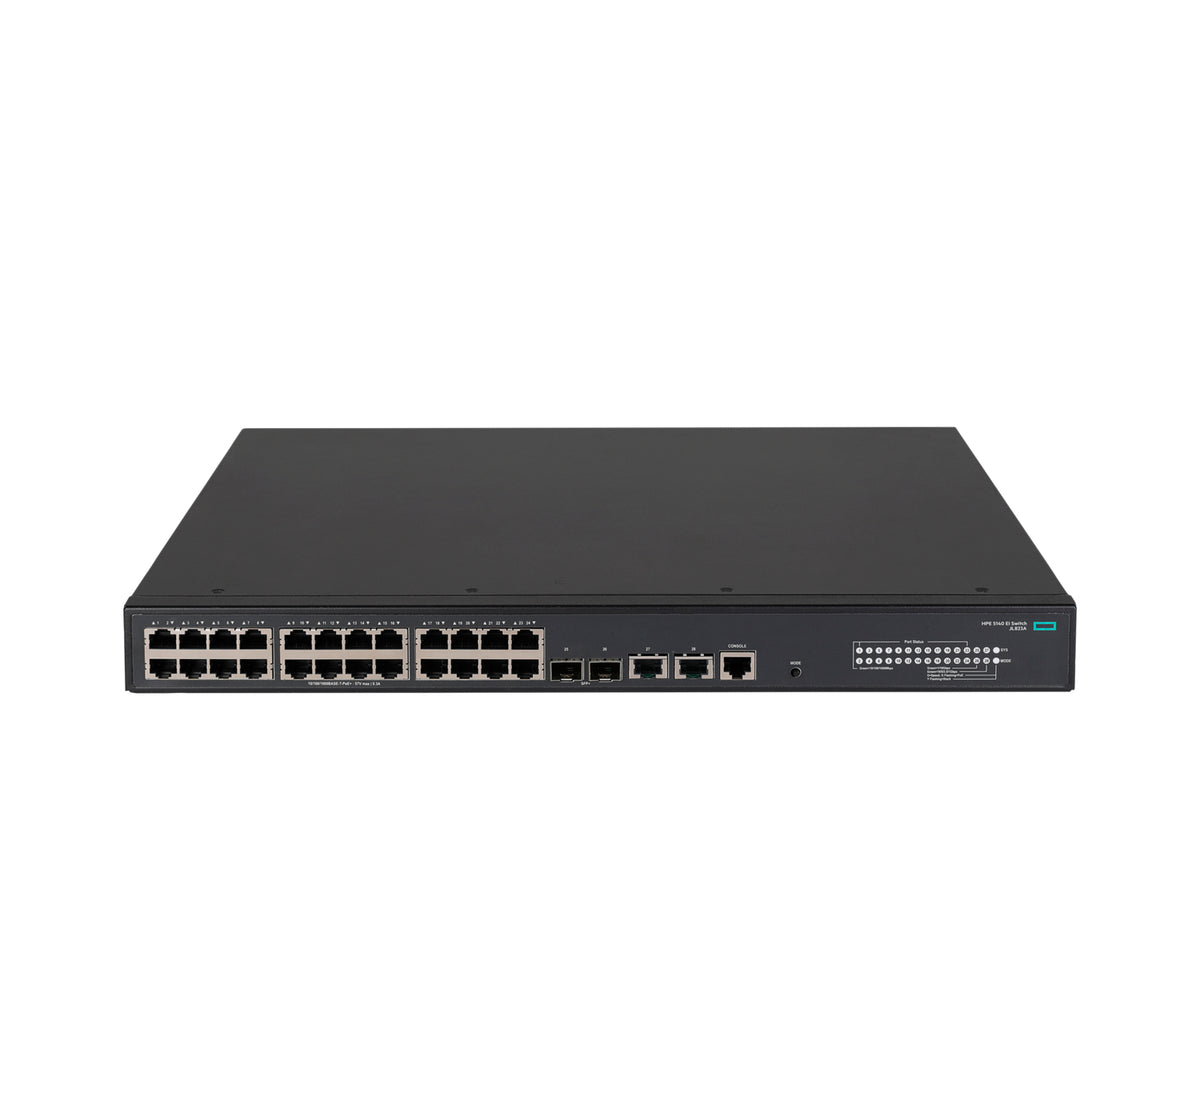 HPE FlexNetwork 5140 24G PoE+ 2SFP+ 2XGT EI - Switch - L3 - Smart - 24 x 10/100/1000 (PoE+) + 2 x 1 Gigabit / 10 Gigabit SFP+ + 2 x 10 Gigabit Ethernet - Rail mountable - PoE+ (370W) - BTO